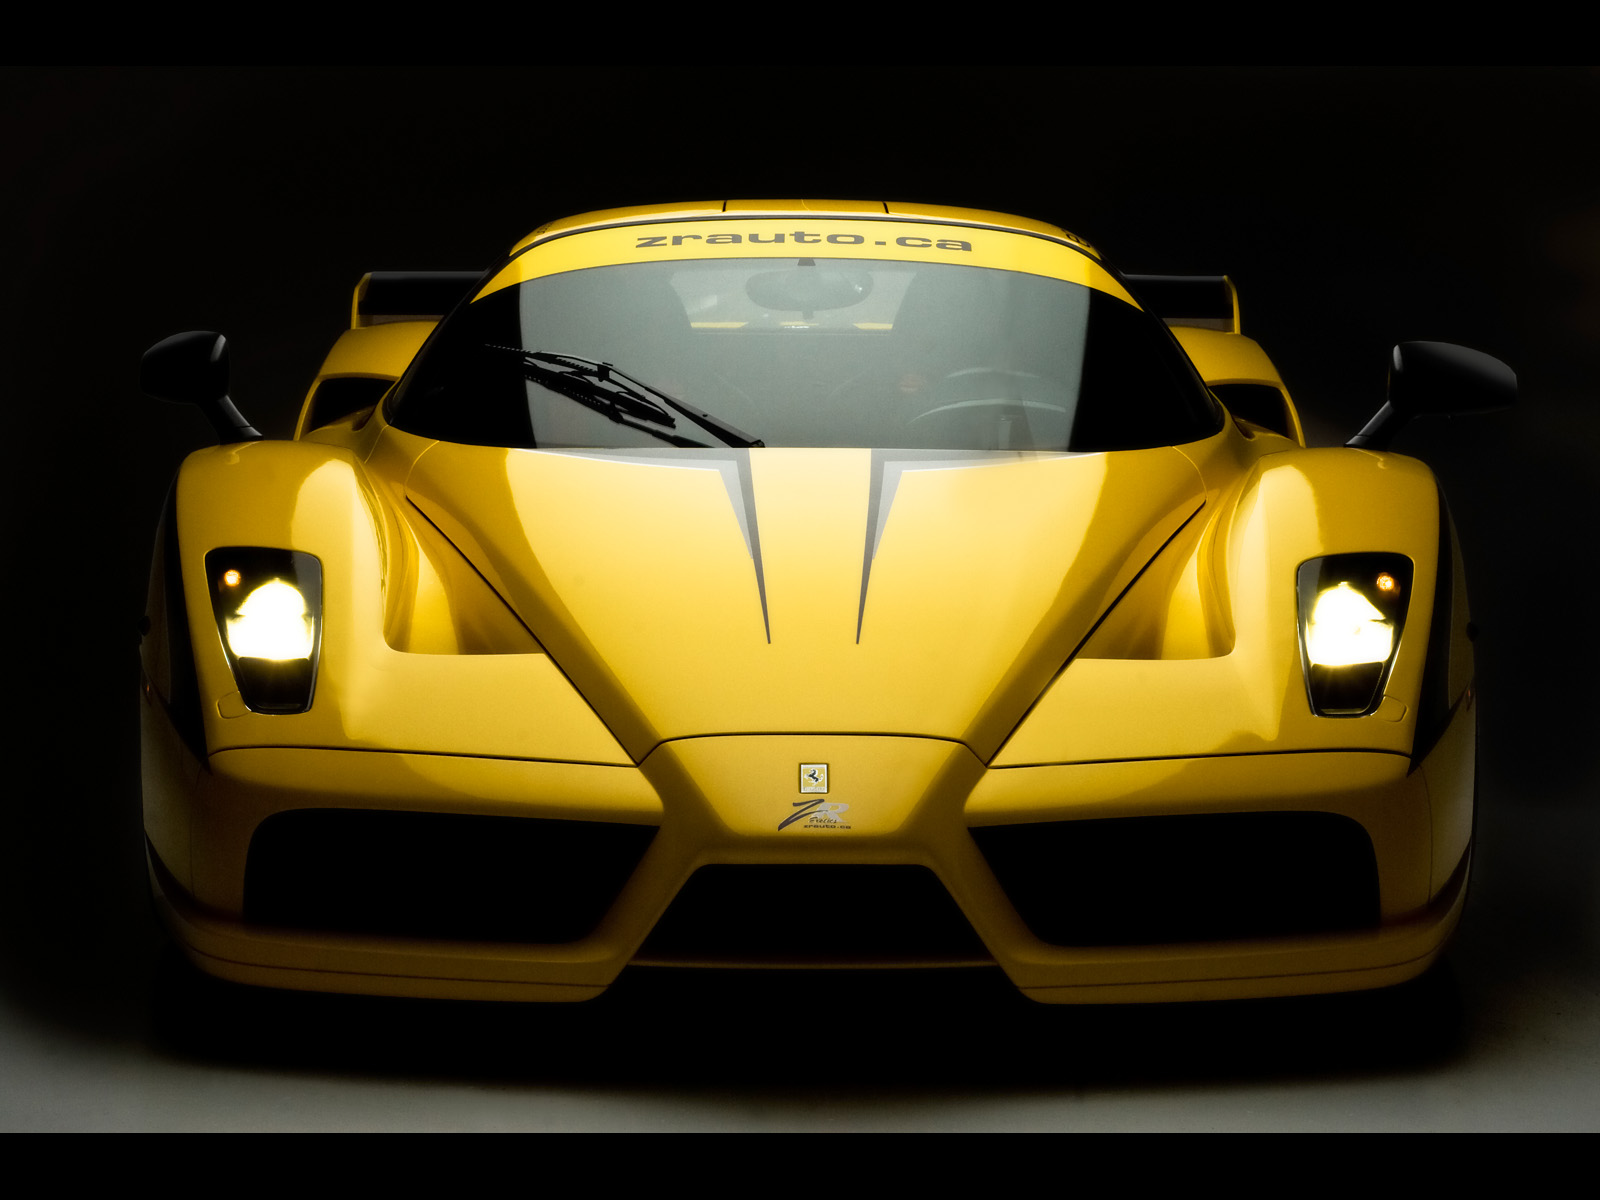 2010, Edo competition, Ferrari, Enzo, Xx, Evolution, Supercar, X x Wallpaper